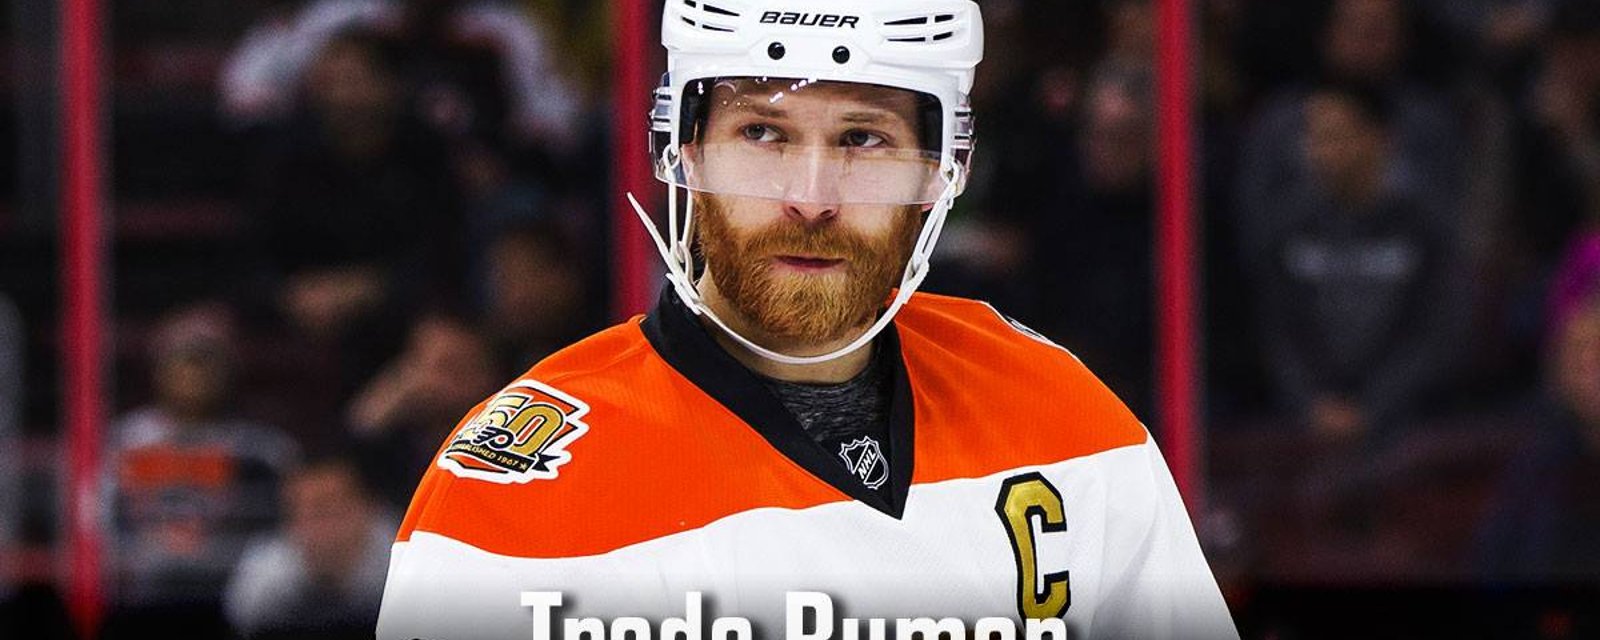 Breaking: Absolutely insane trade rumor involving Flyers star Claude Giroux.